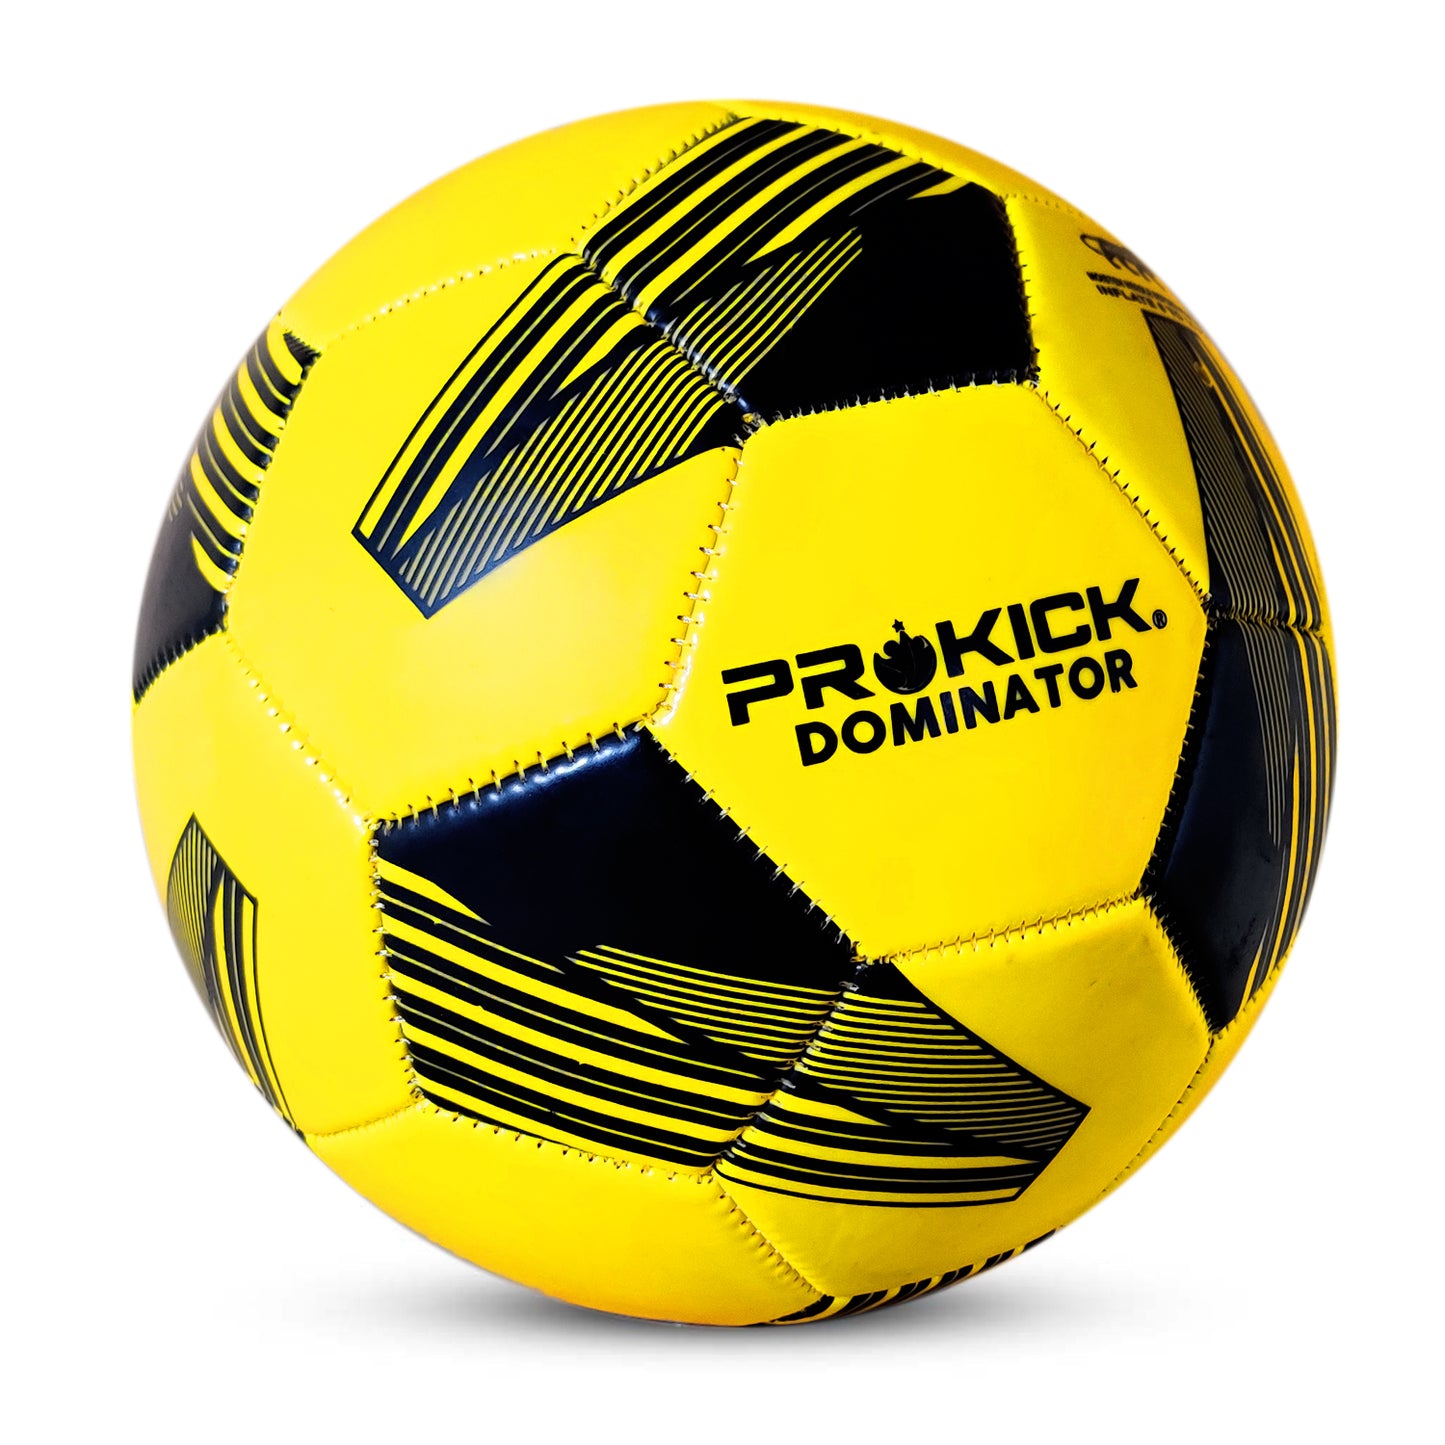 Prokick Dominator Machine Stitched 32 Panel Football, Size 5 (Yellow/Black) - Best Price online Prokicksports.com